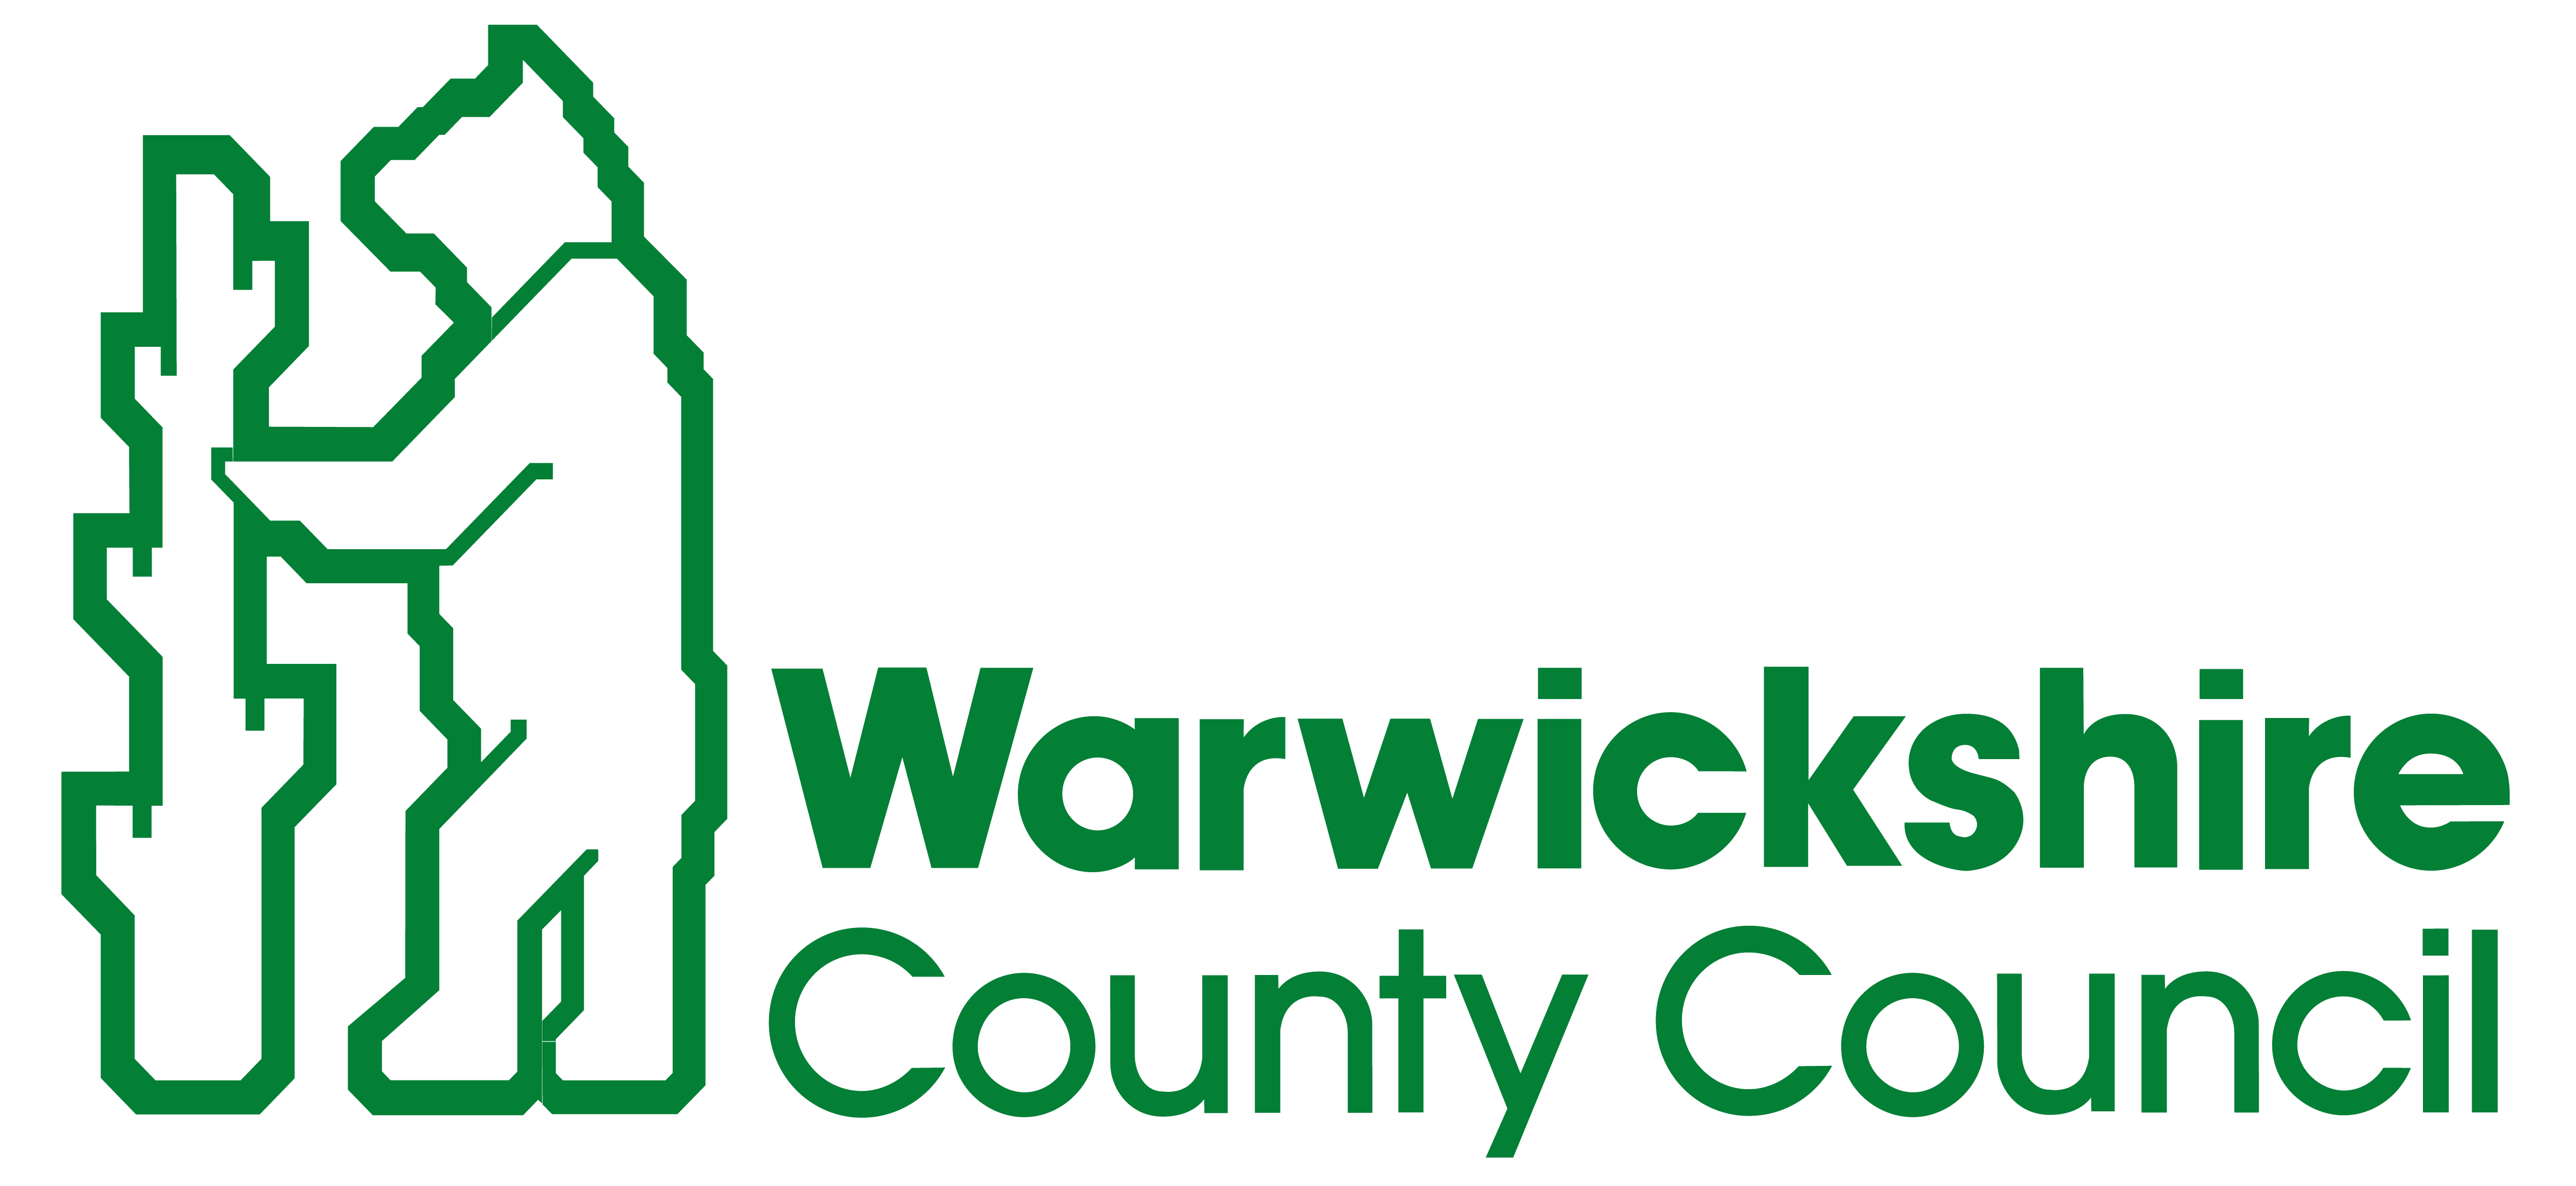 Wcc logo colour